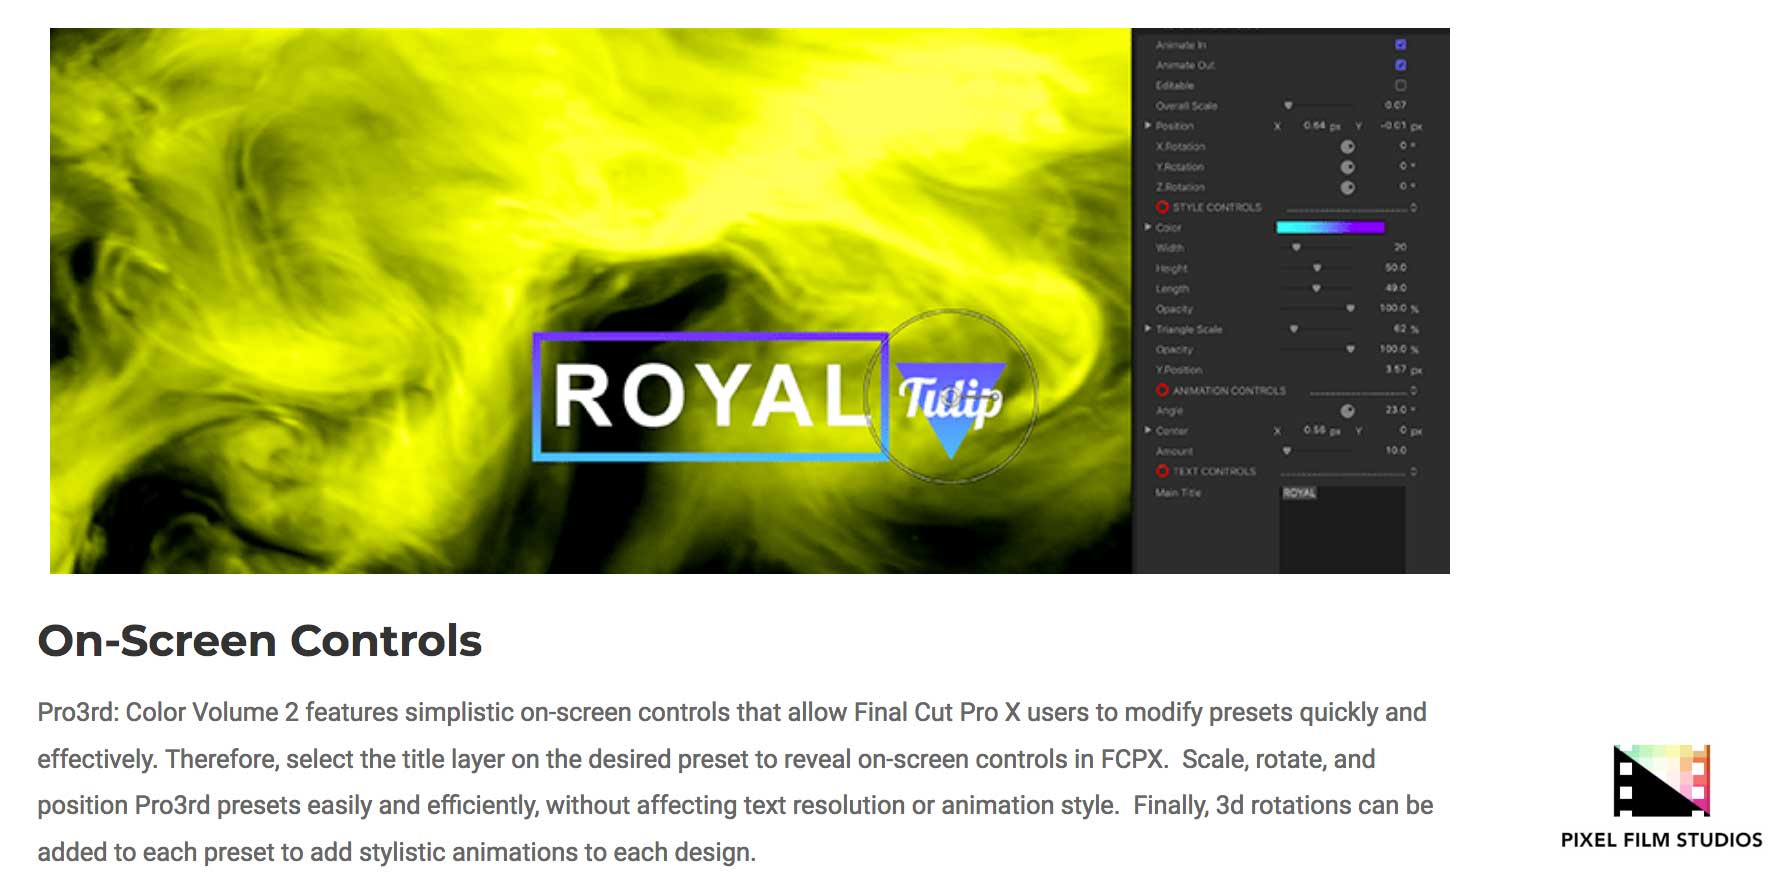 Pro3rd Color Volume 2 - Pixel Film Studios Plugins - FCPX Effects